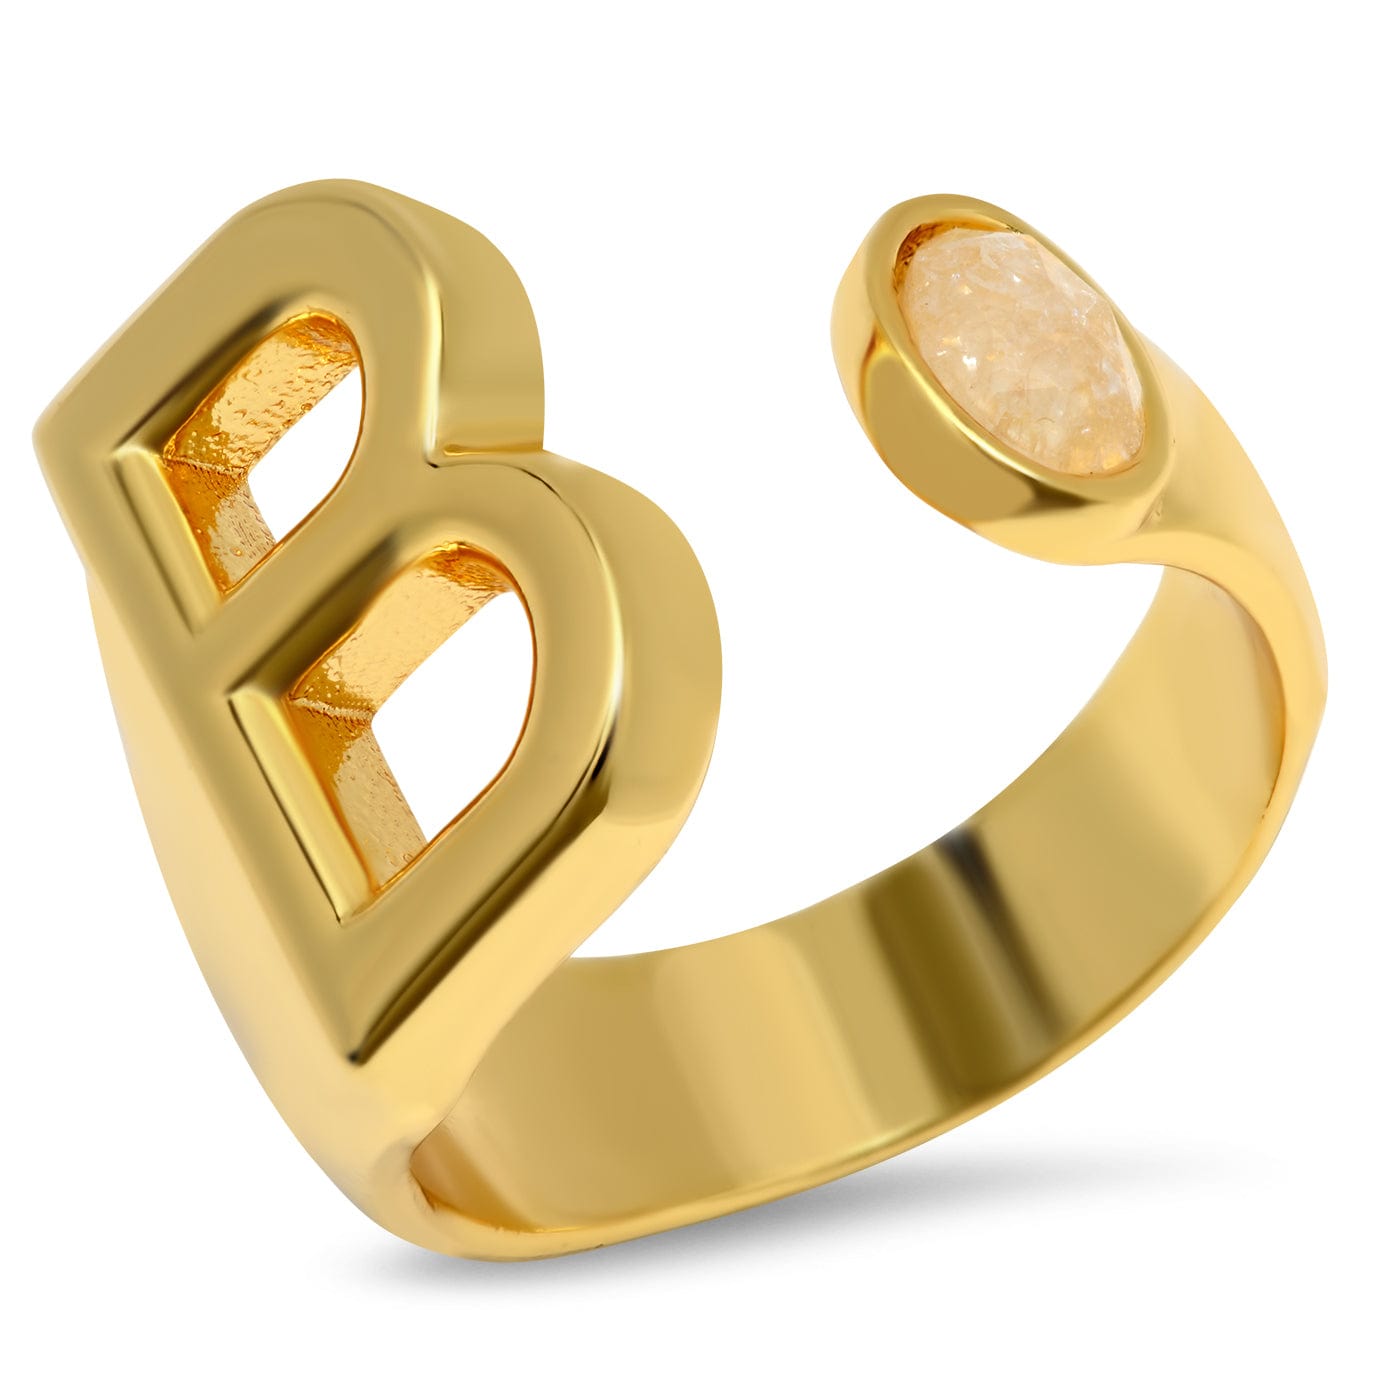 TAI JEWELRY Rings B Initial Wrap Ring